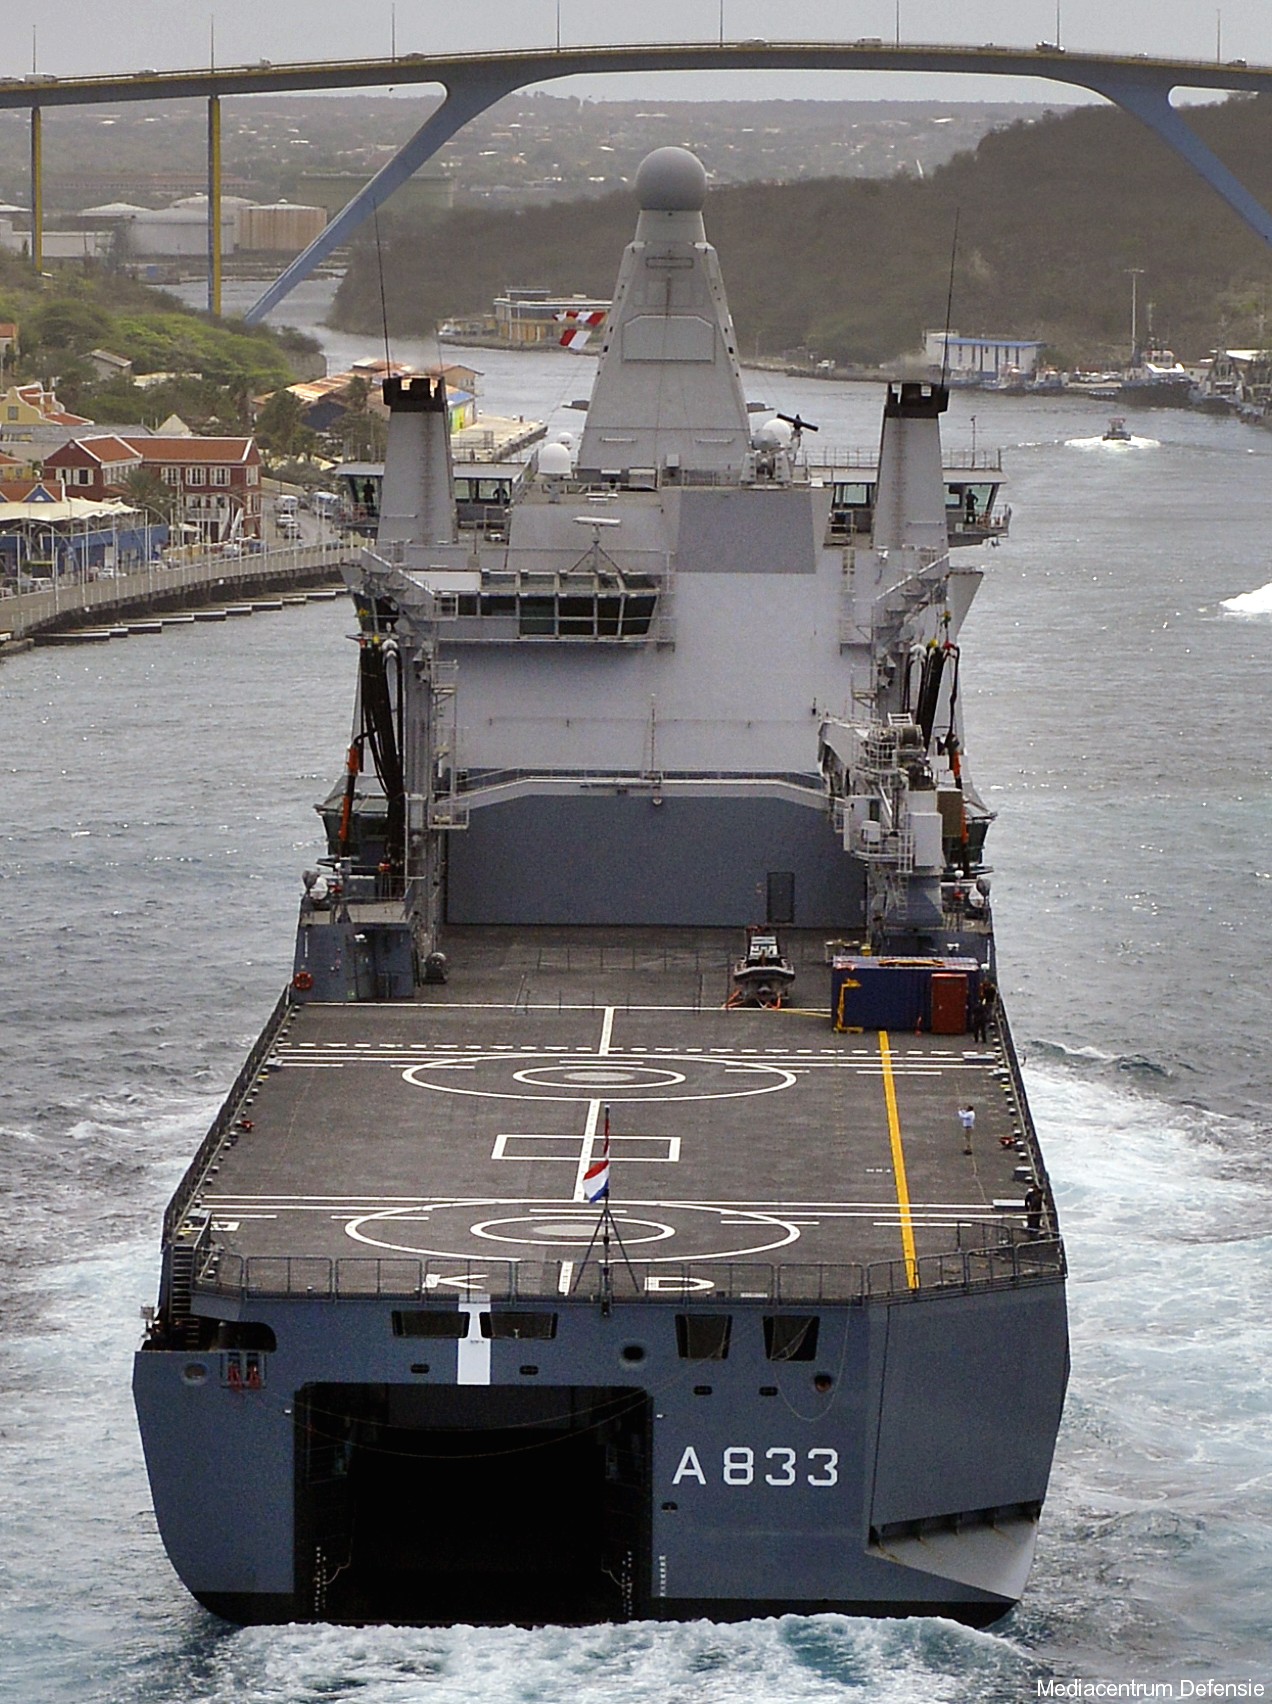 a-833 hnlms karel doorman joint support ship royal netherlands navy koninklijke marine 26